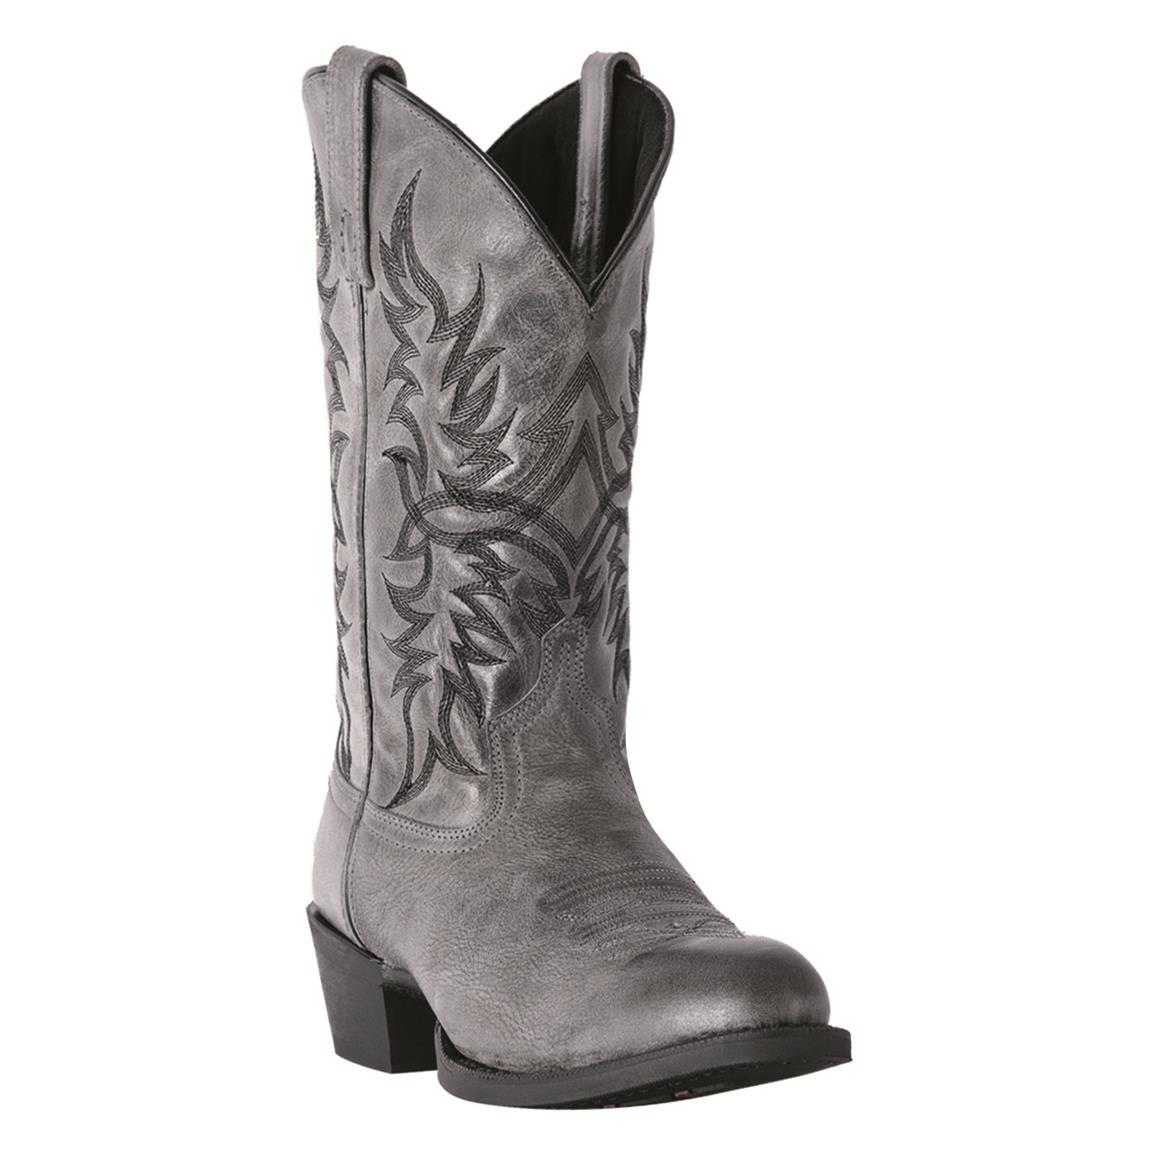 Laredo Men's Harding Leather Western Boots, Gray